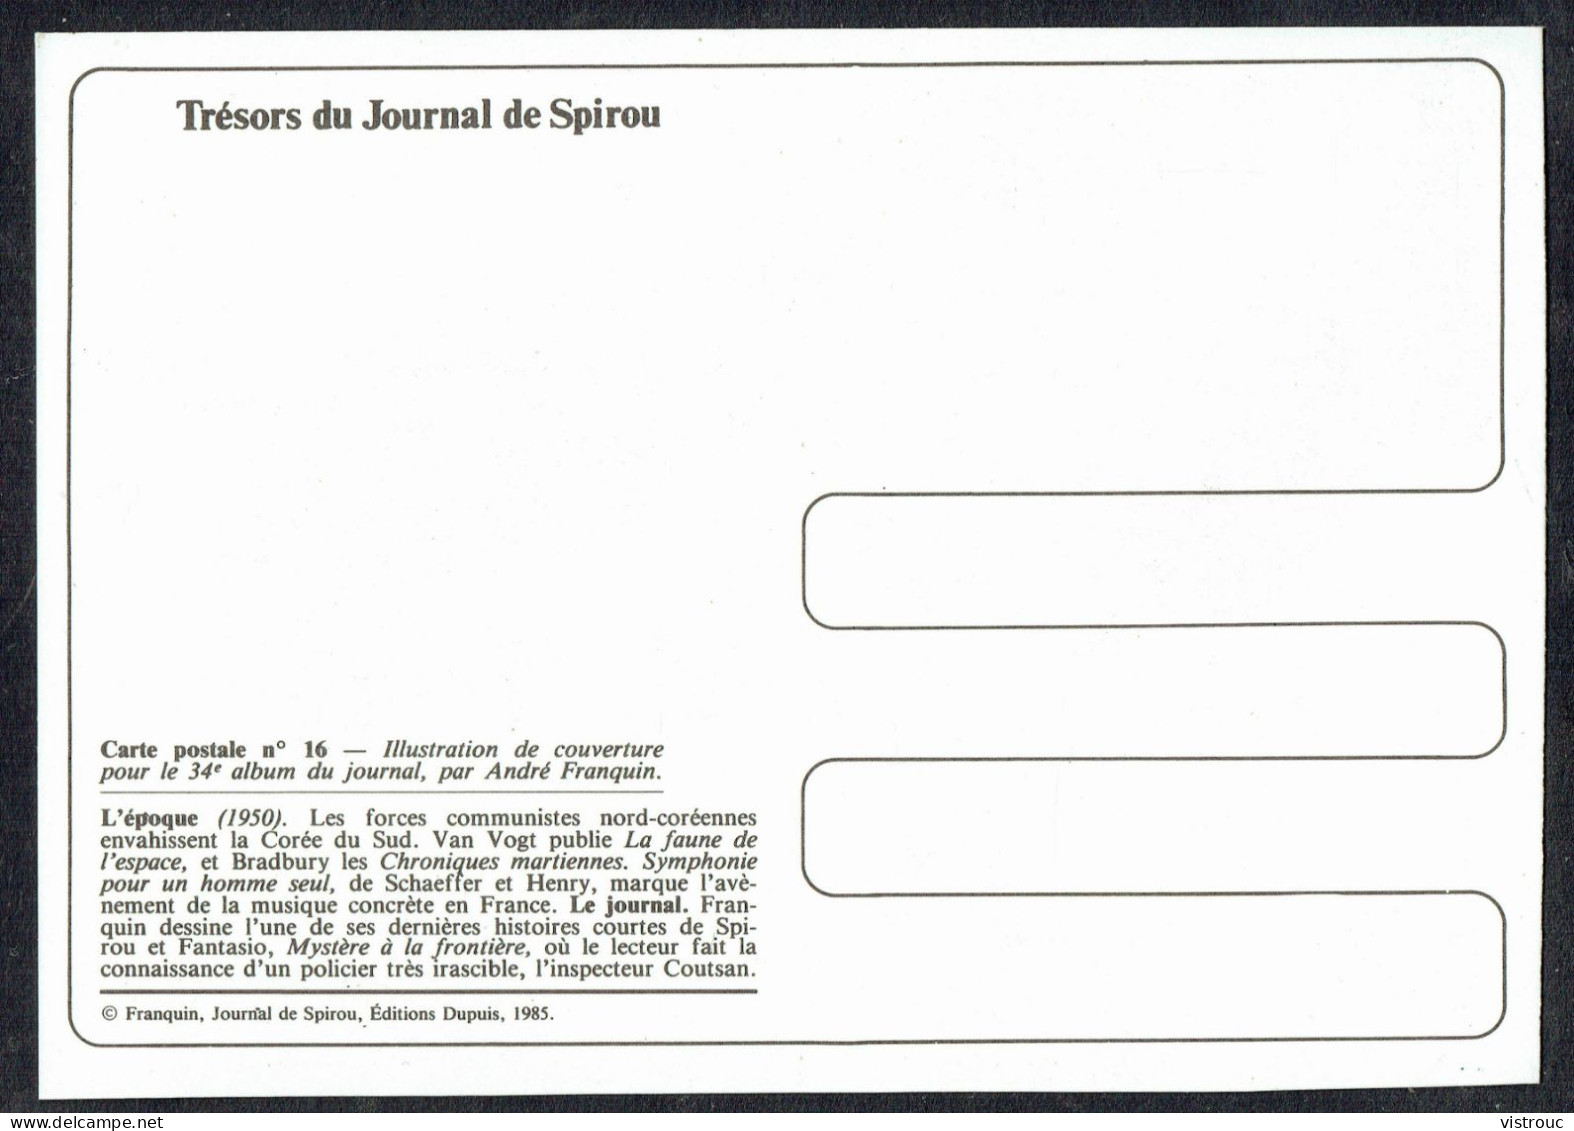 SPIROU - CP N° 16 : Illustration Couverture Album N° 34 De FRANQUIN - Non Circulé - Not Circulated - Ed. DUPUIS - 1985. - Comics